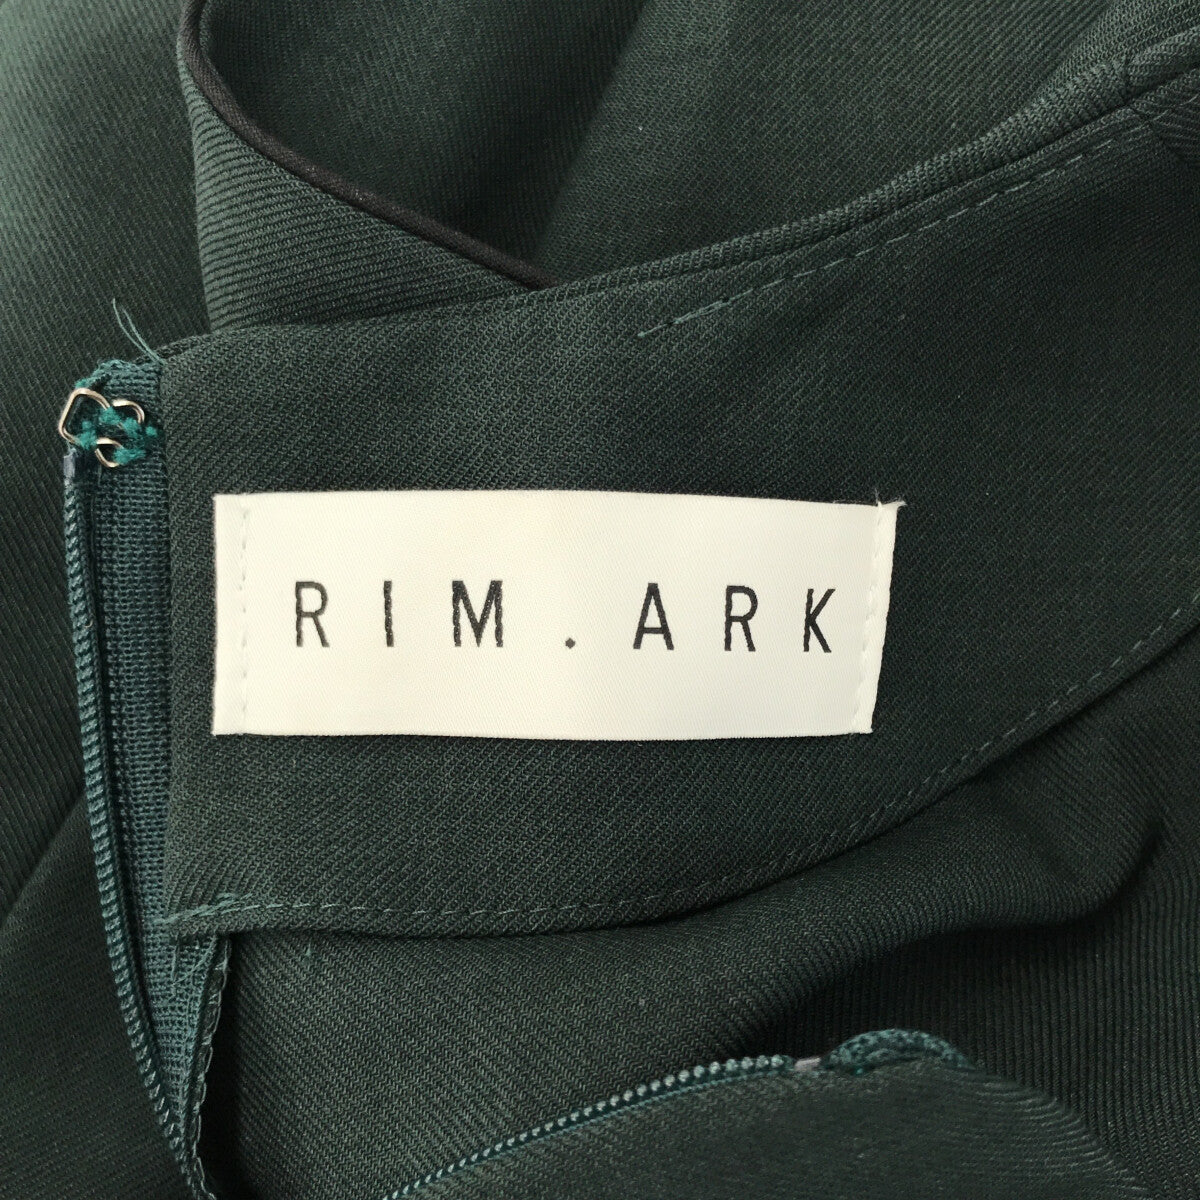 RIM.ARK / リムアーク | Ruffle tops トップス | 36 | ダークグリーン ...